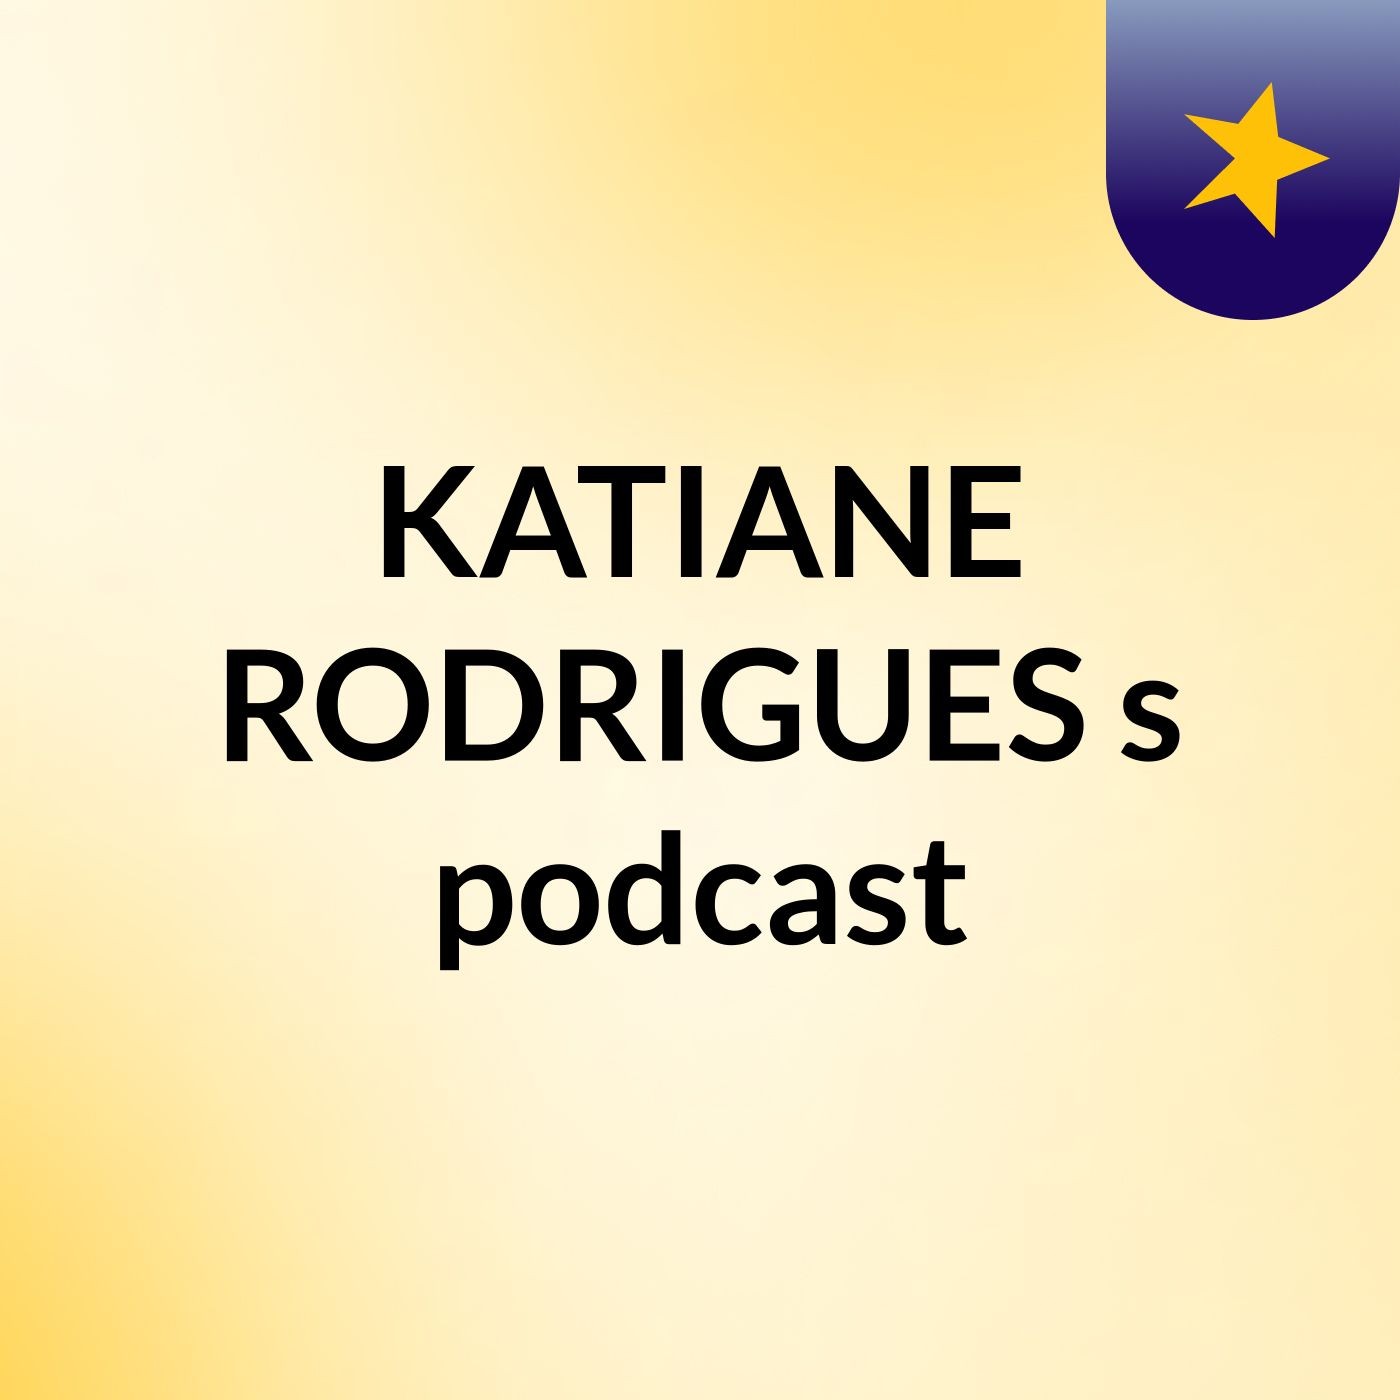 KATIANE RODRIGUES's podcast